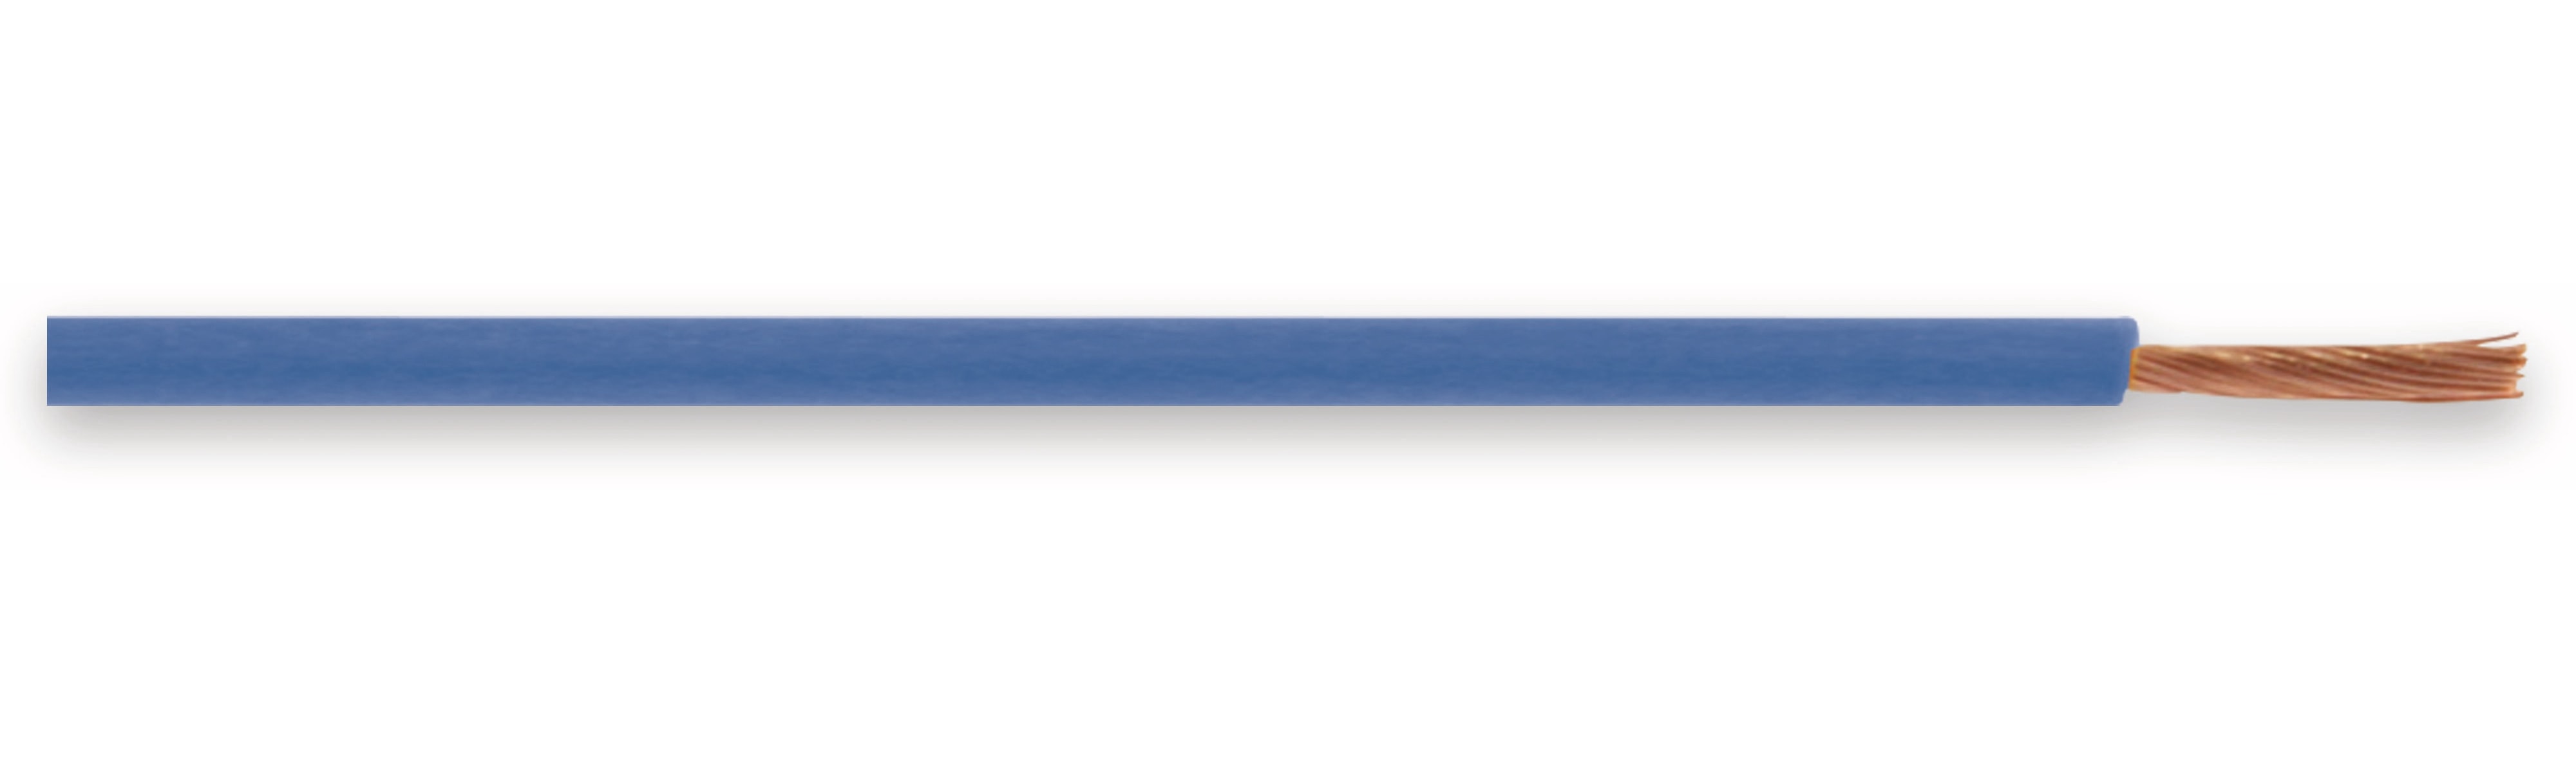 Litze H07V-K, 1,5mm², 10m, blau